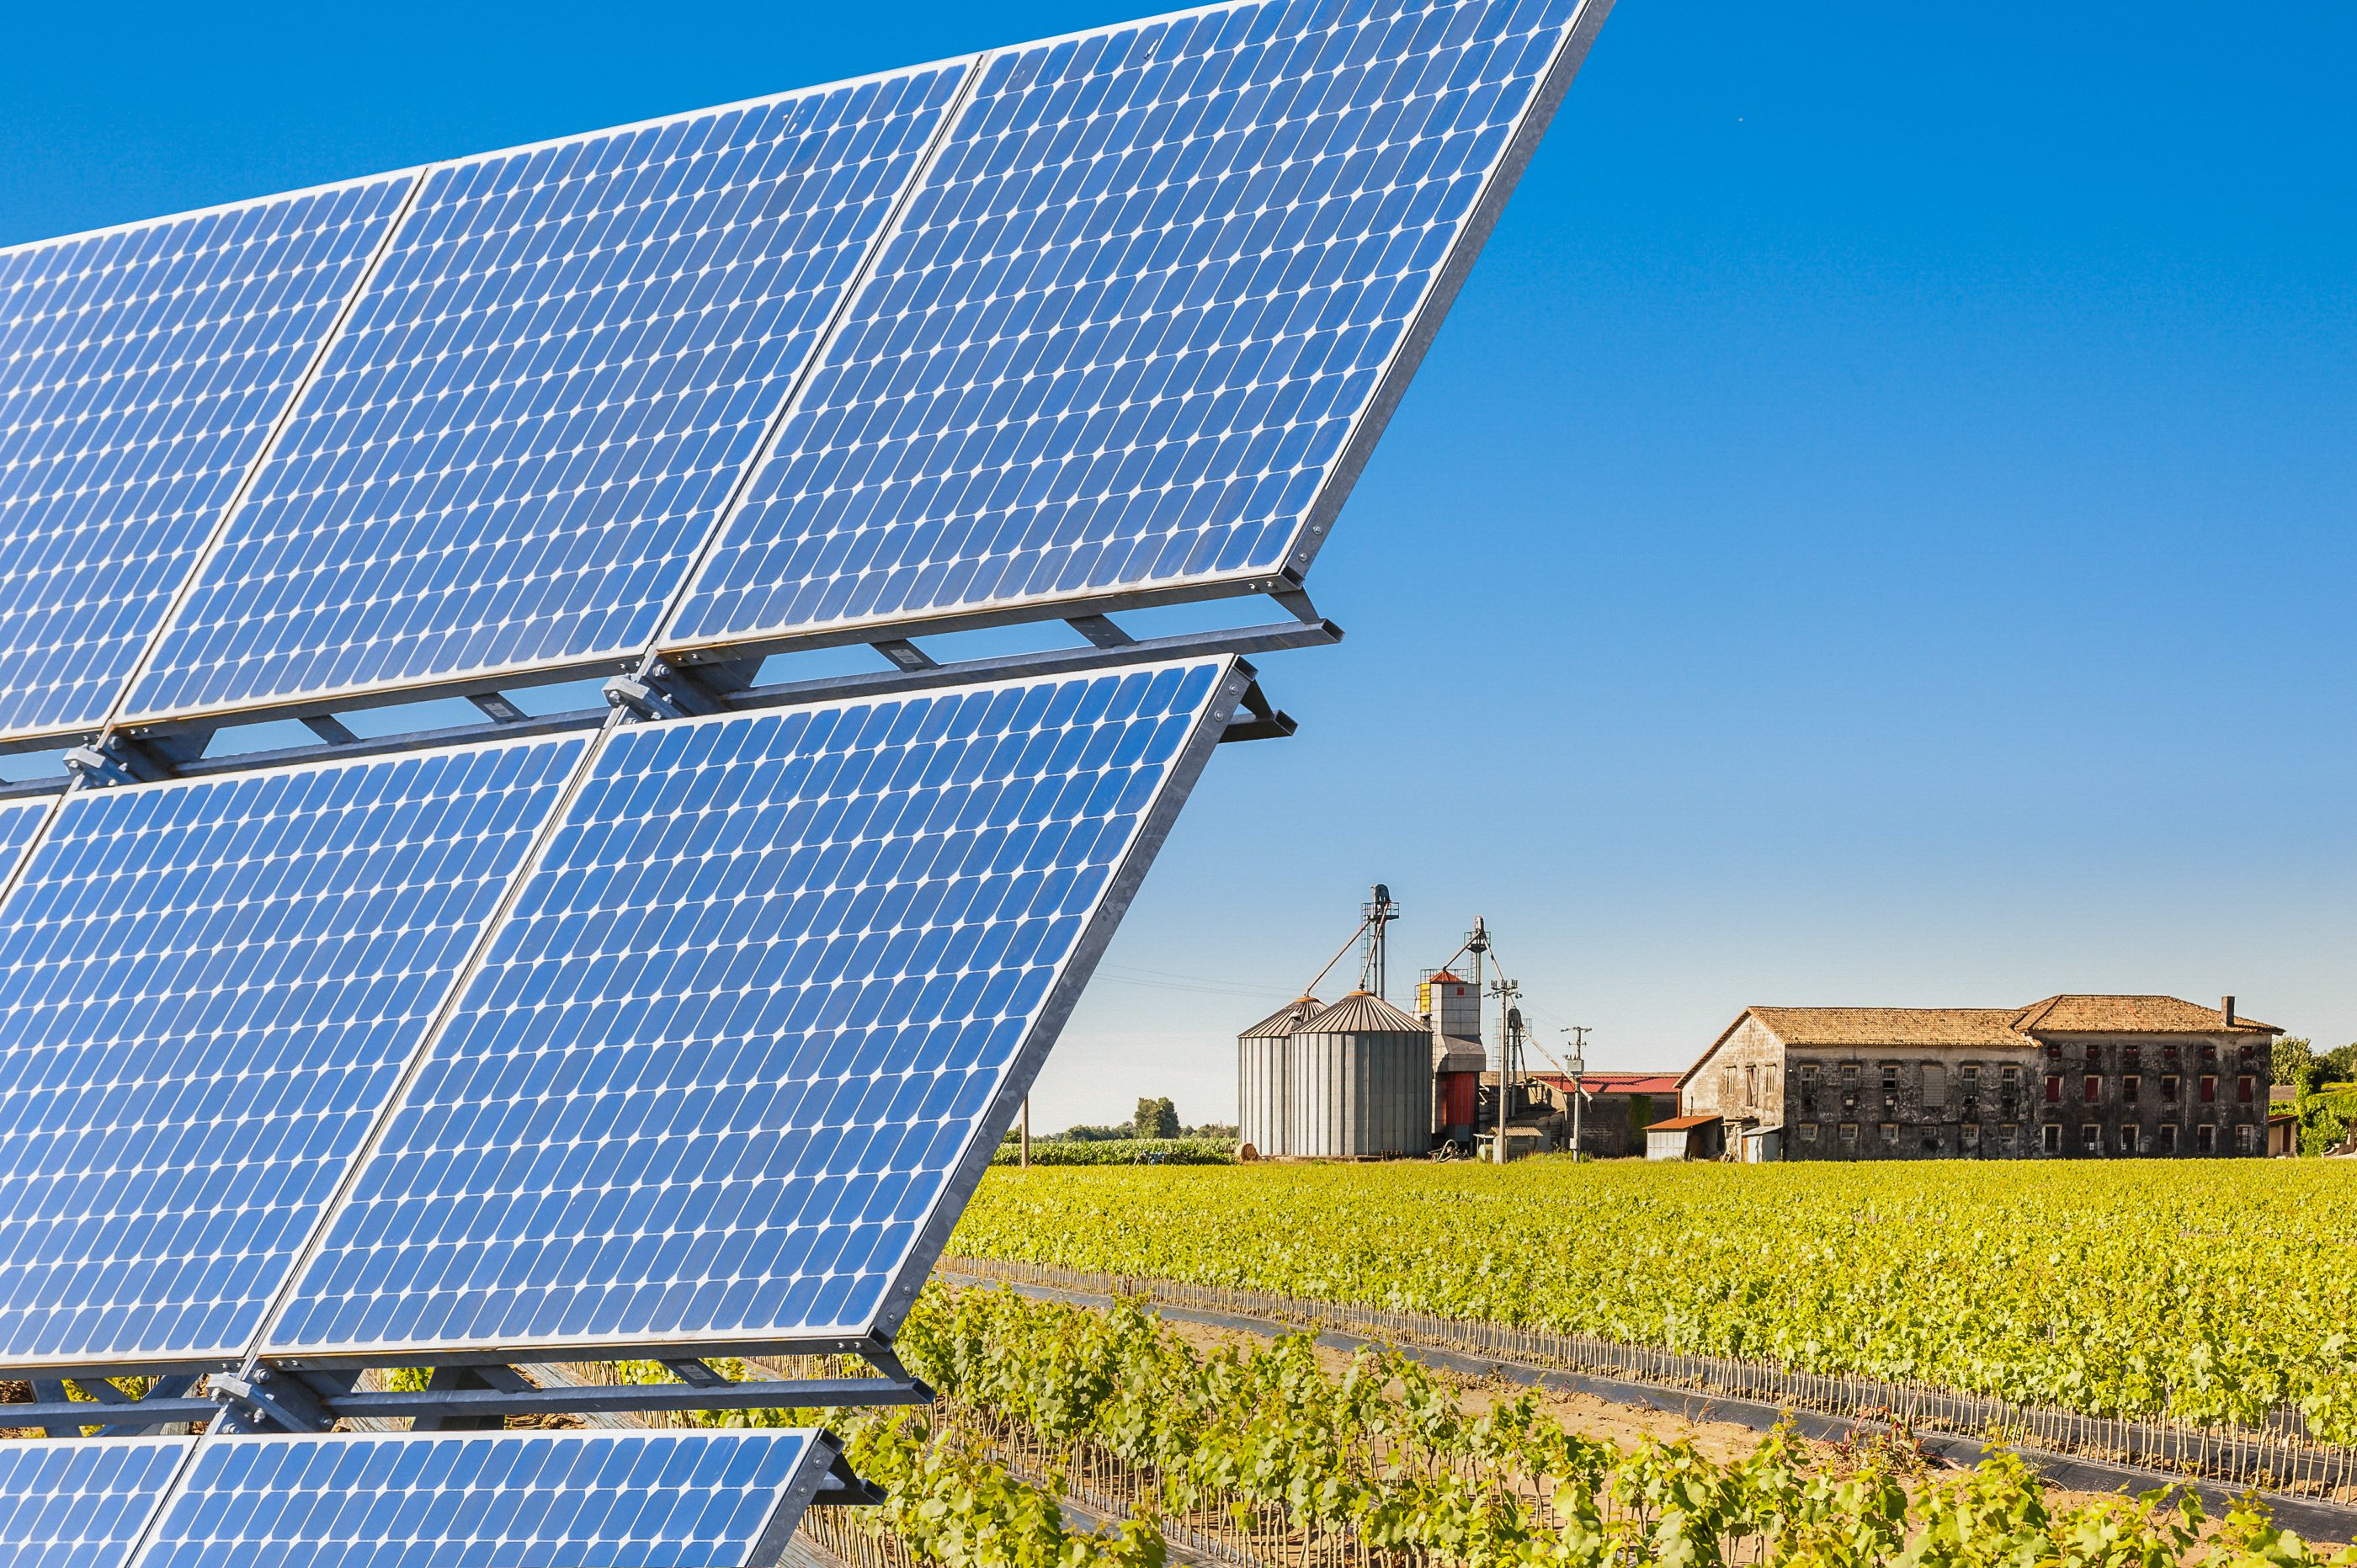 Solar panels to produce green energy.